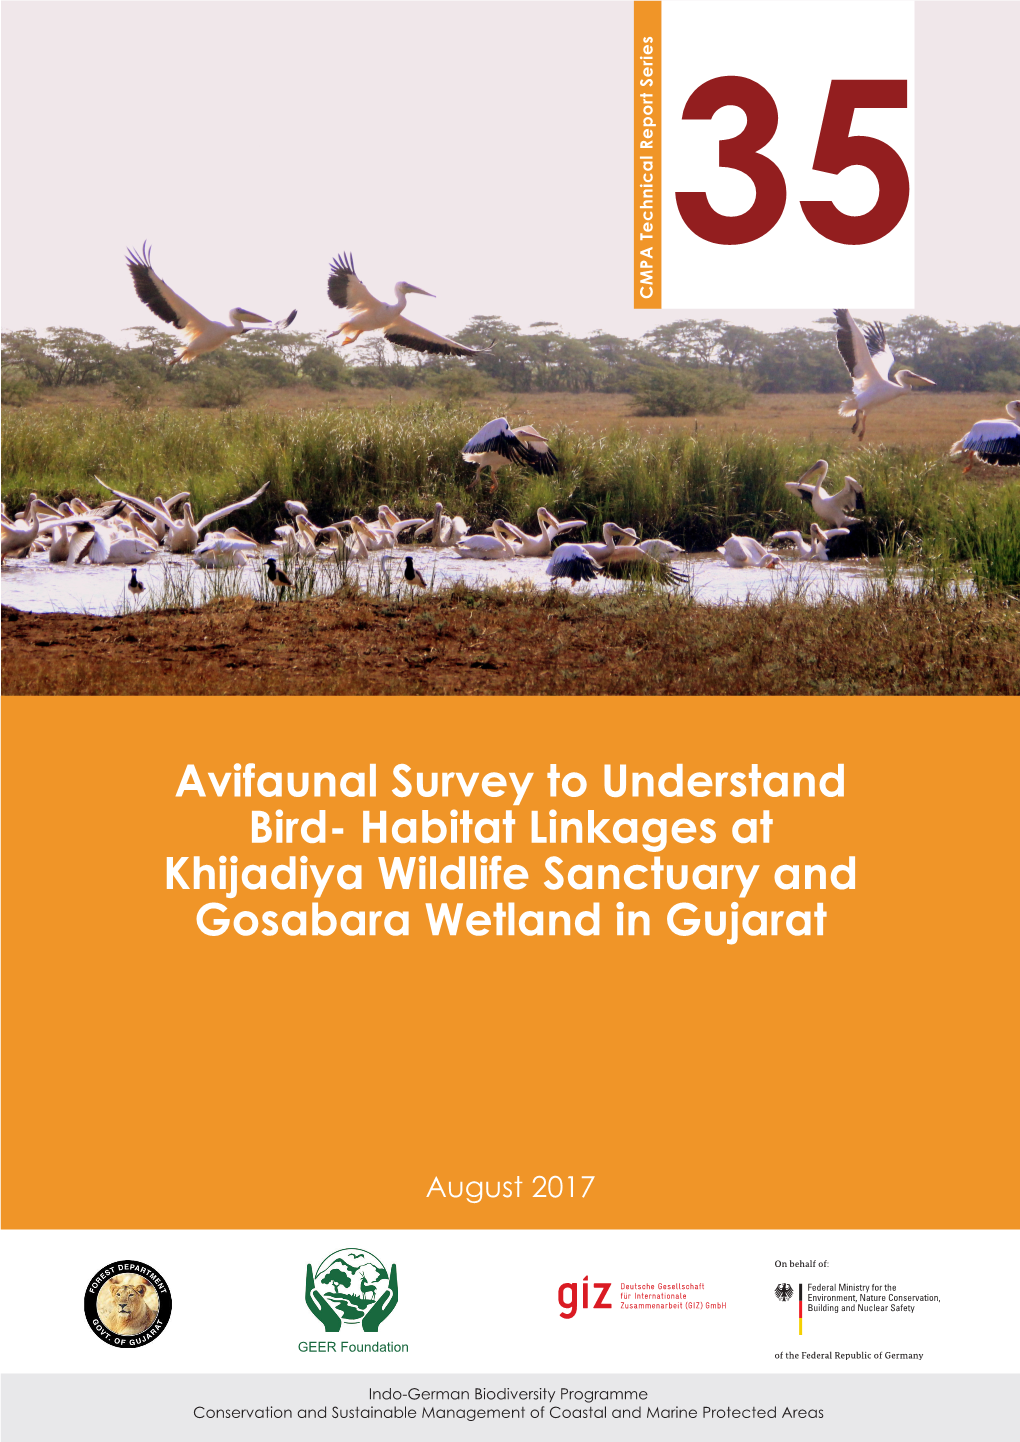 Avifaunal Survey to Understand Bird- Habitat Linkages at Khijadiya Wildlife Sanctuary and Gosabara Wetland in Gujarat